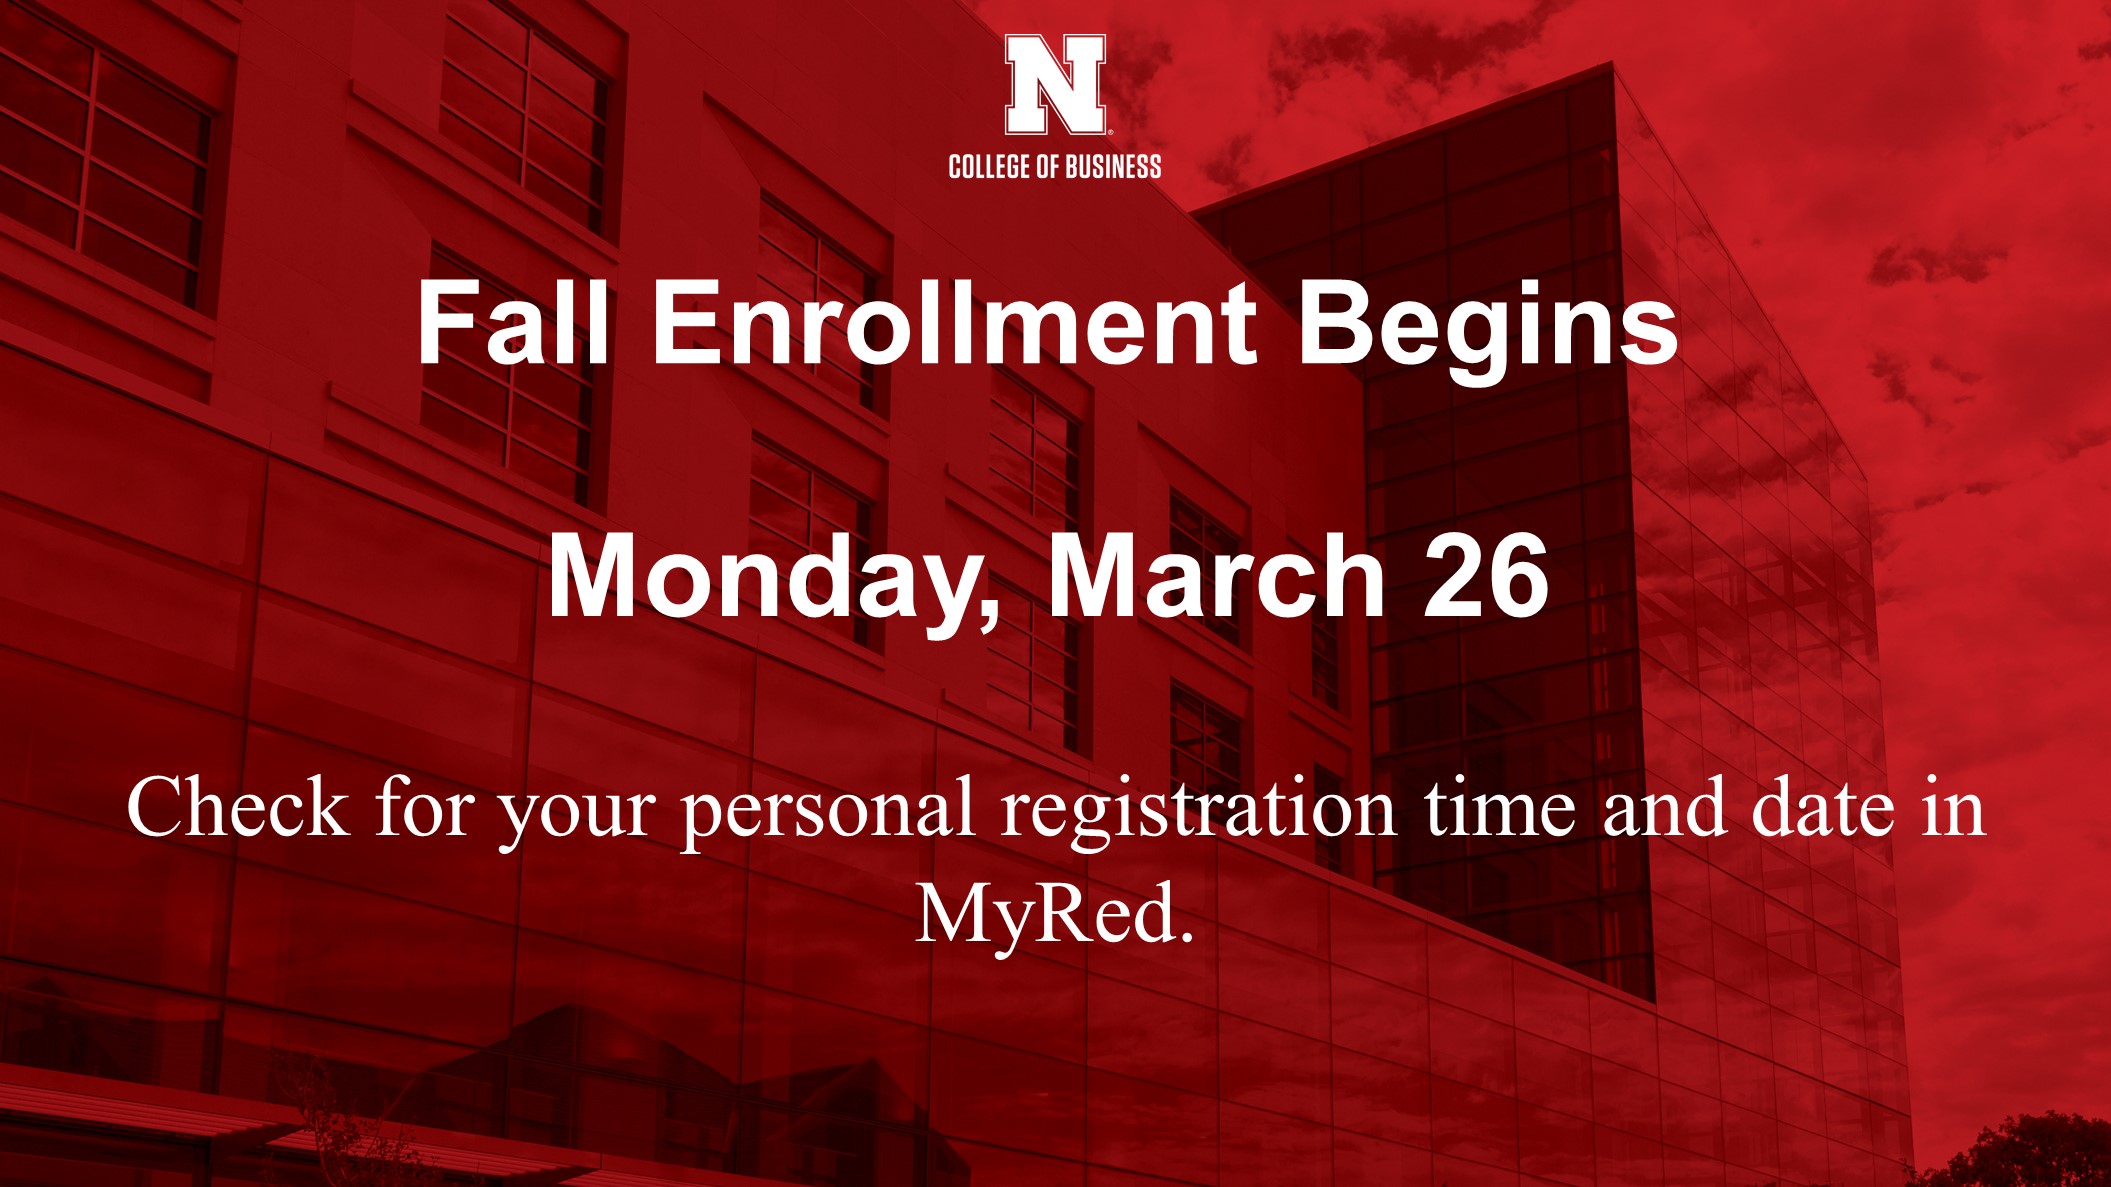 Fall Enrollment Begins Monday, March 26